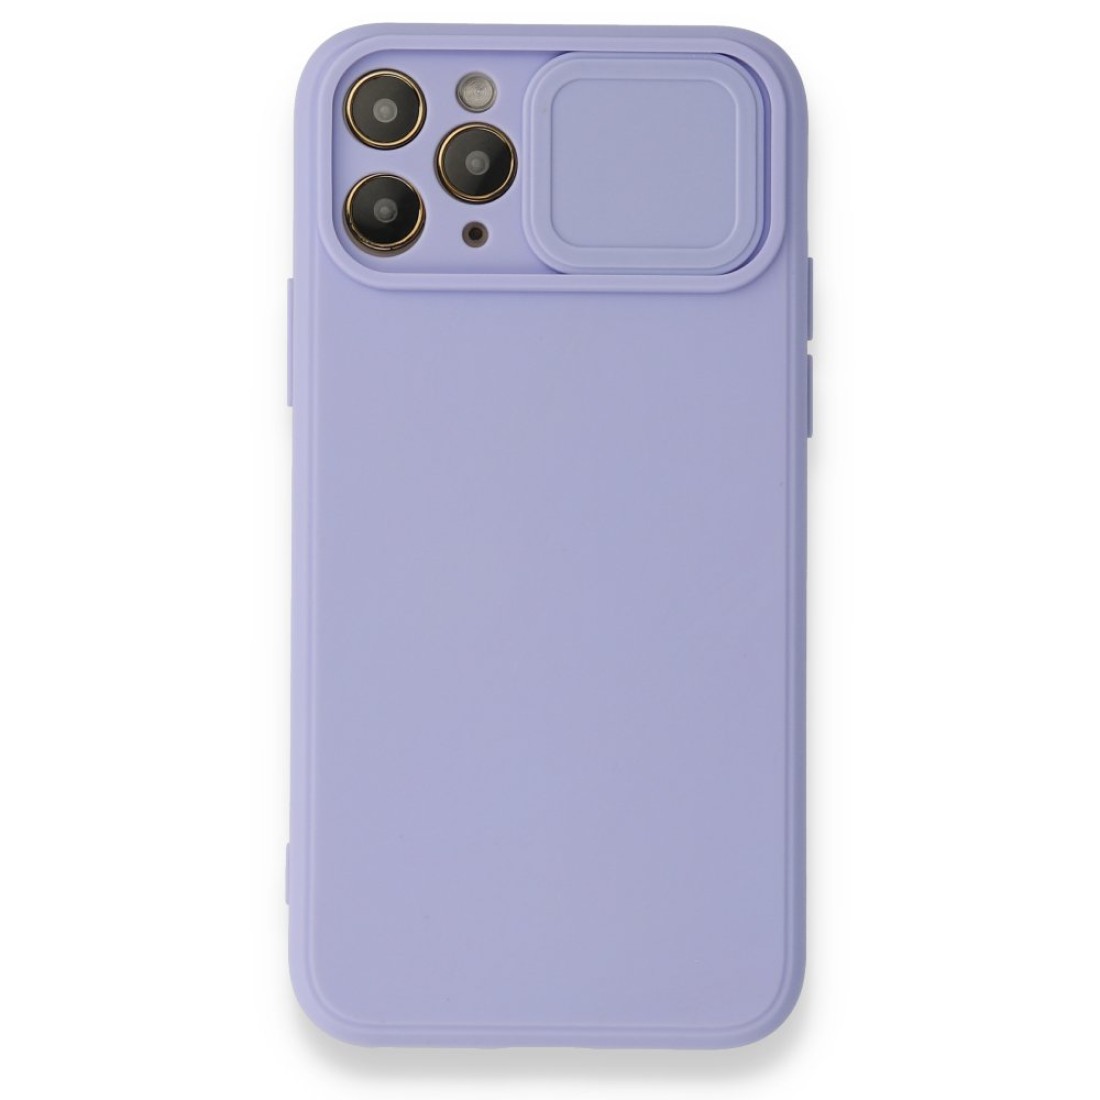 Apple iPhone 11 Pro Max Kılıf Color Lens Silikon - Mor